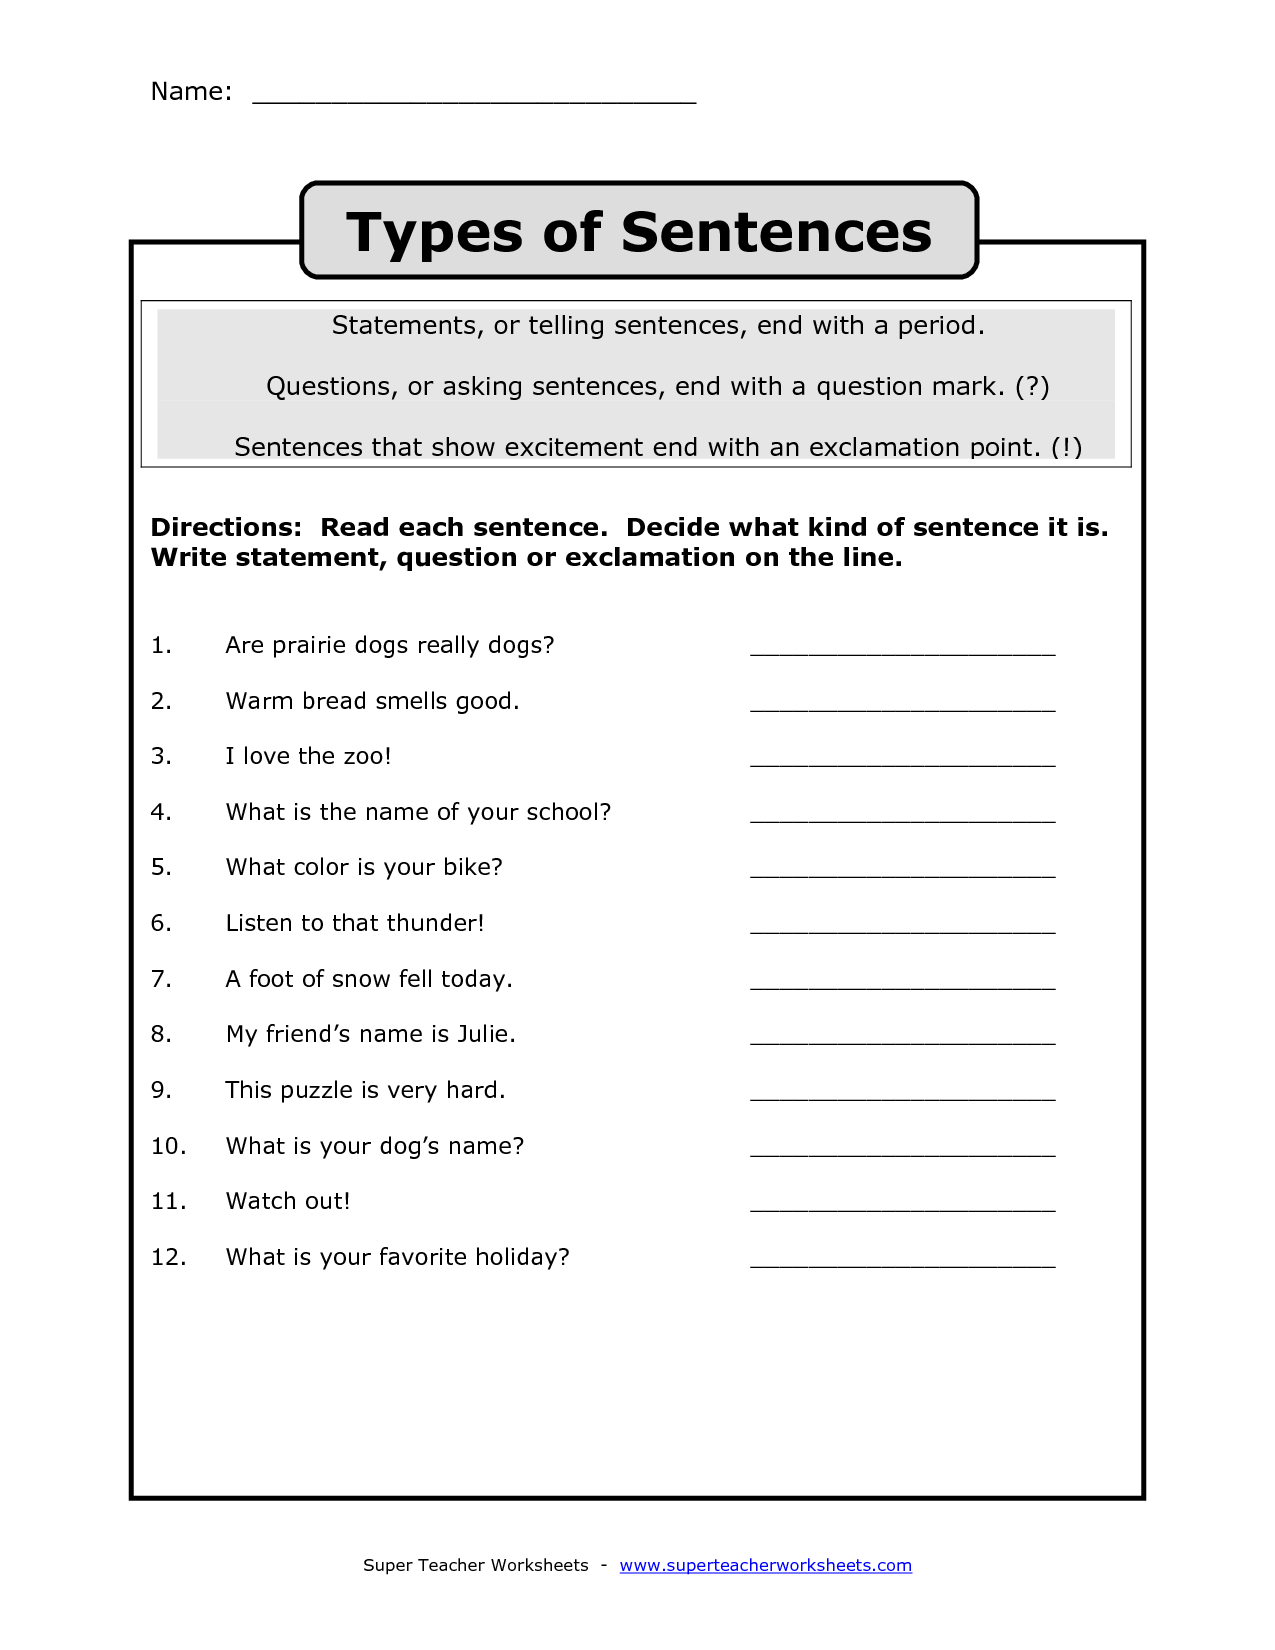 types-of-sentences-quiz-different-types-of-sentences-types-of-sentences-worksheet-punctuation